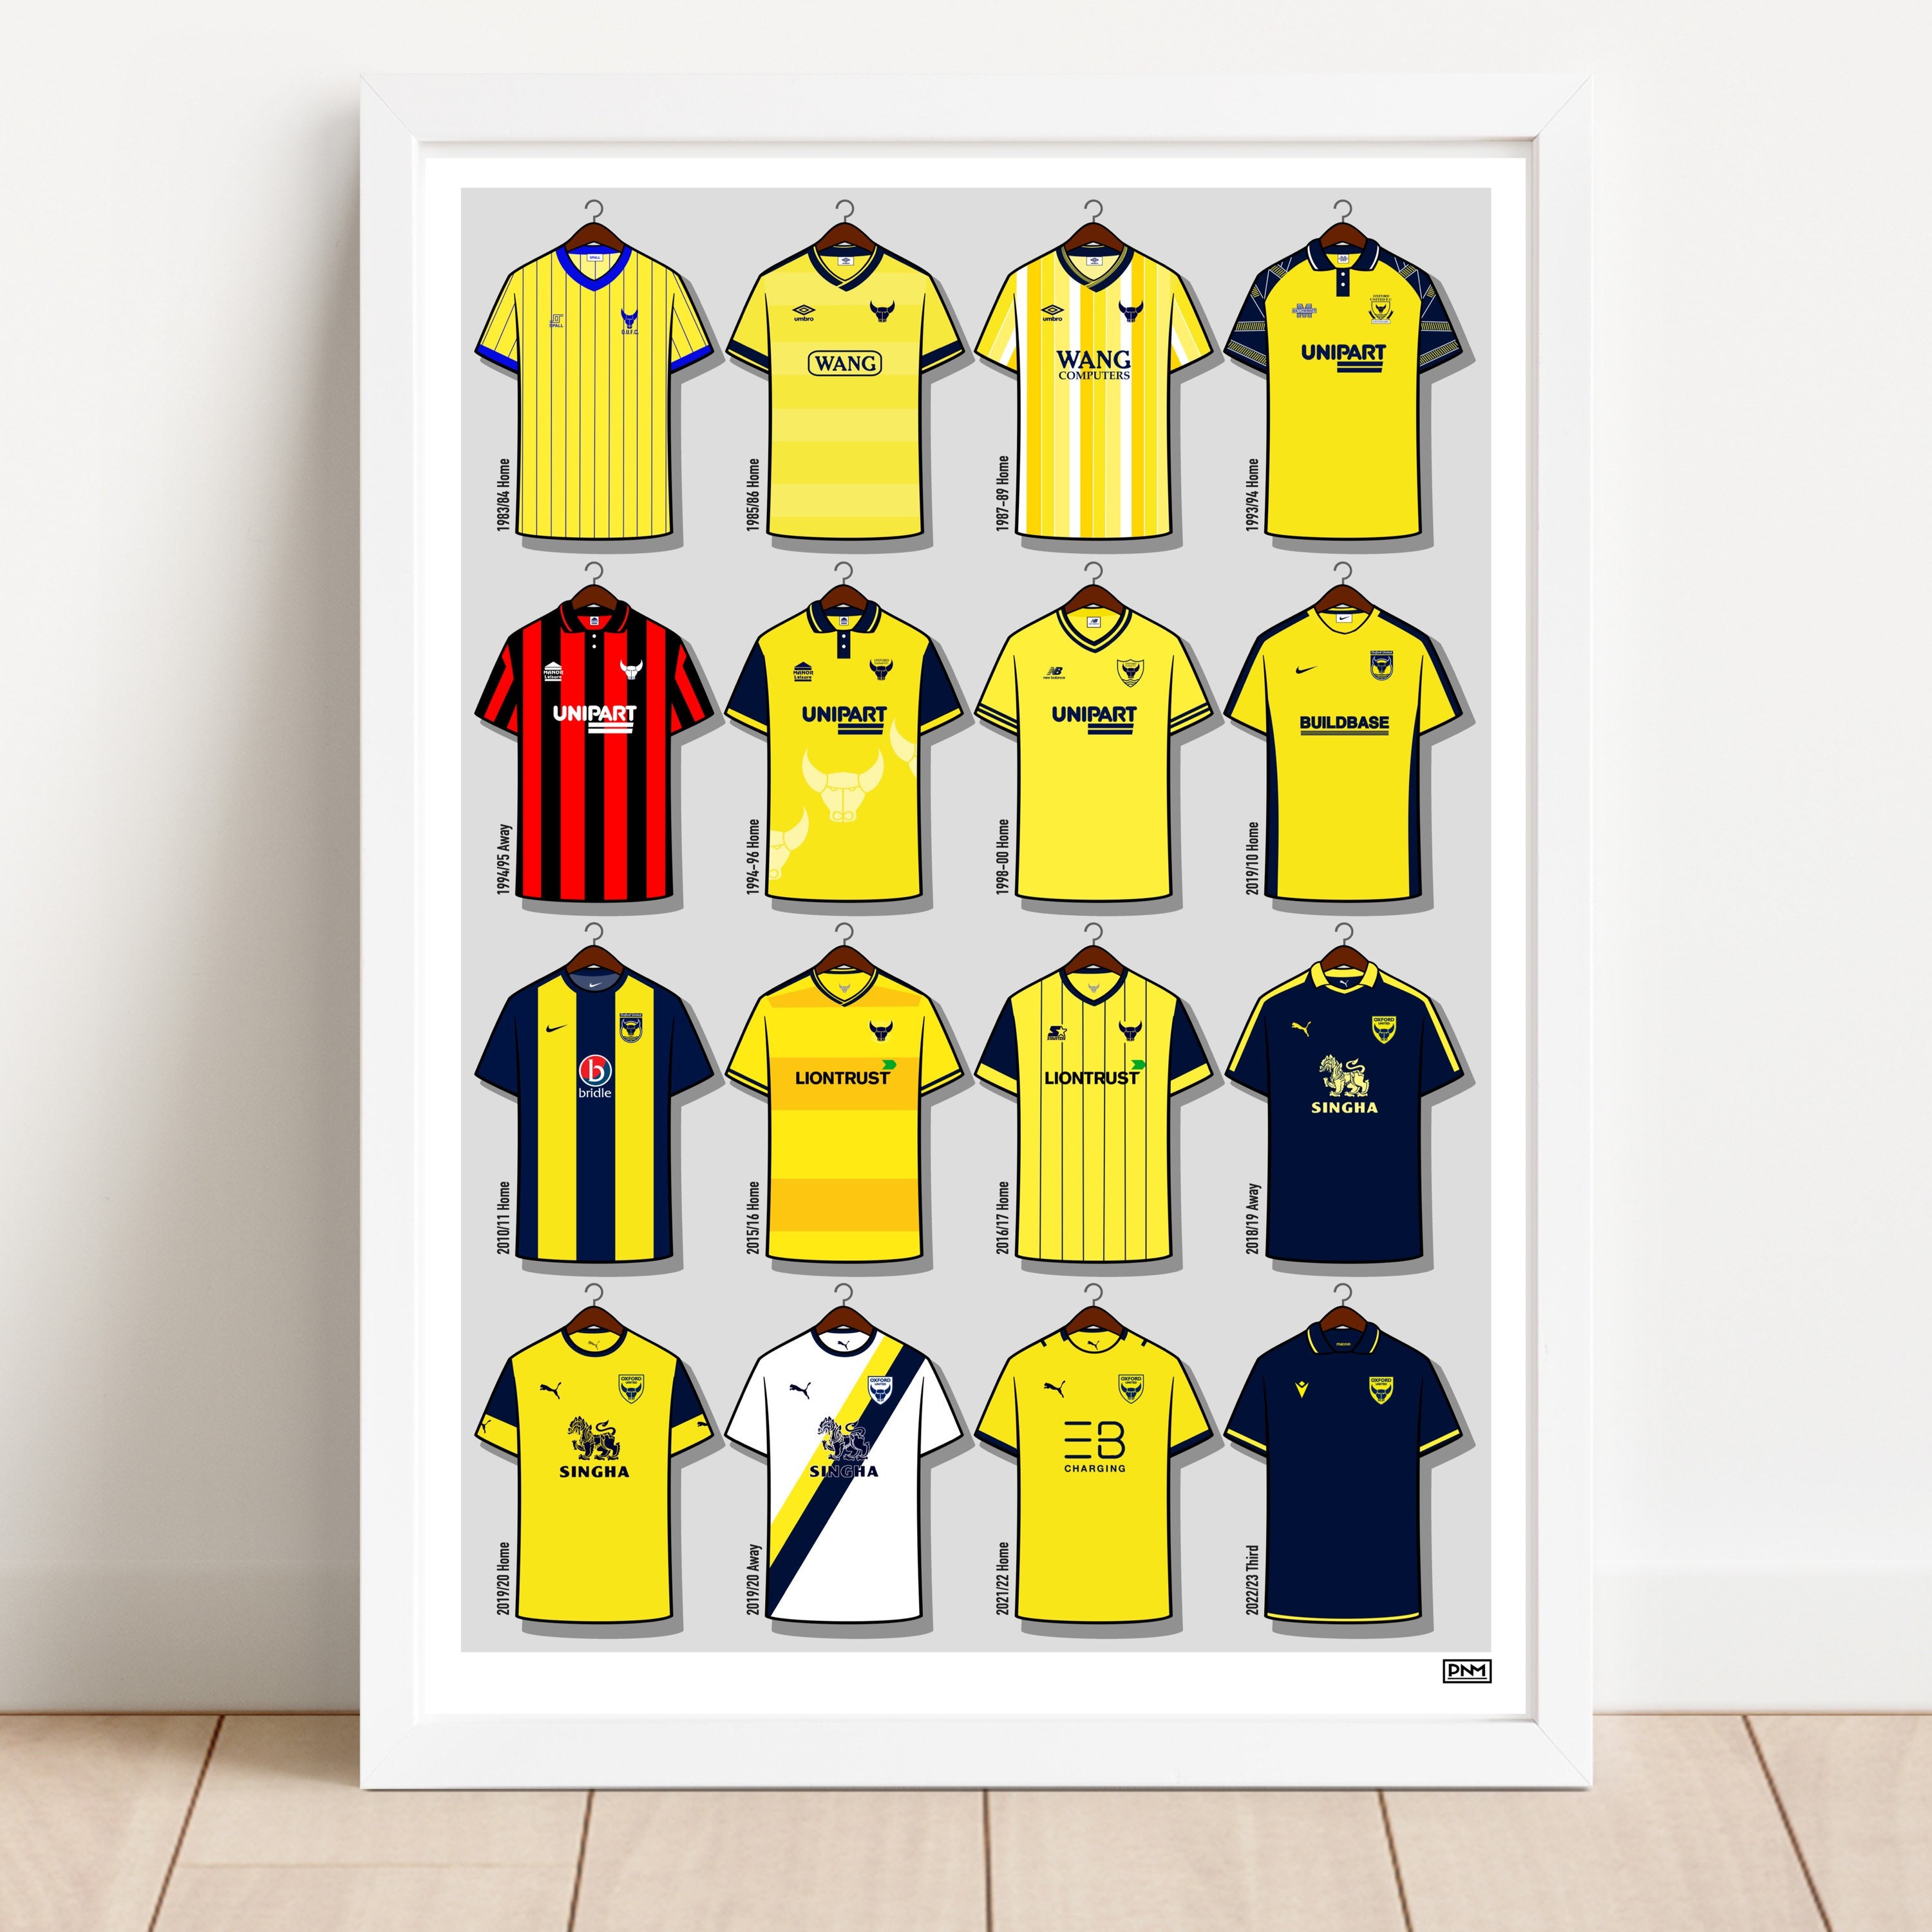 Oxford United Kit History